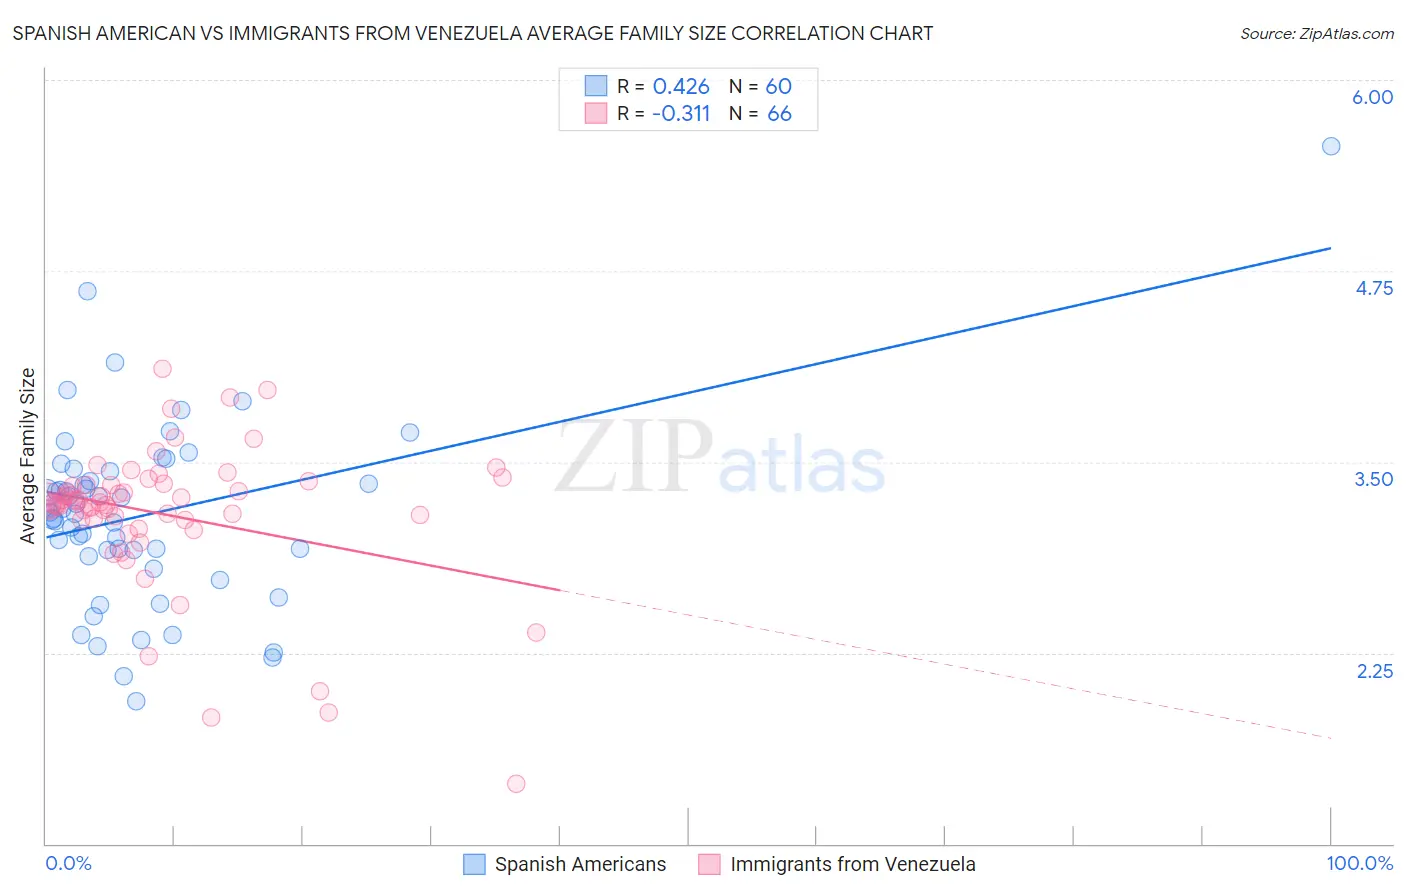 Spanish American vs Immigrants from Venezuela Average Family Size